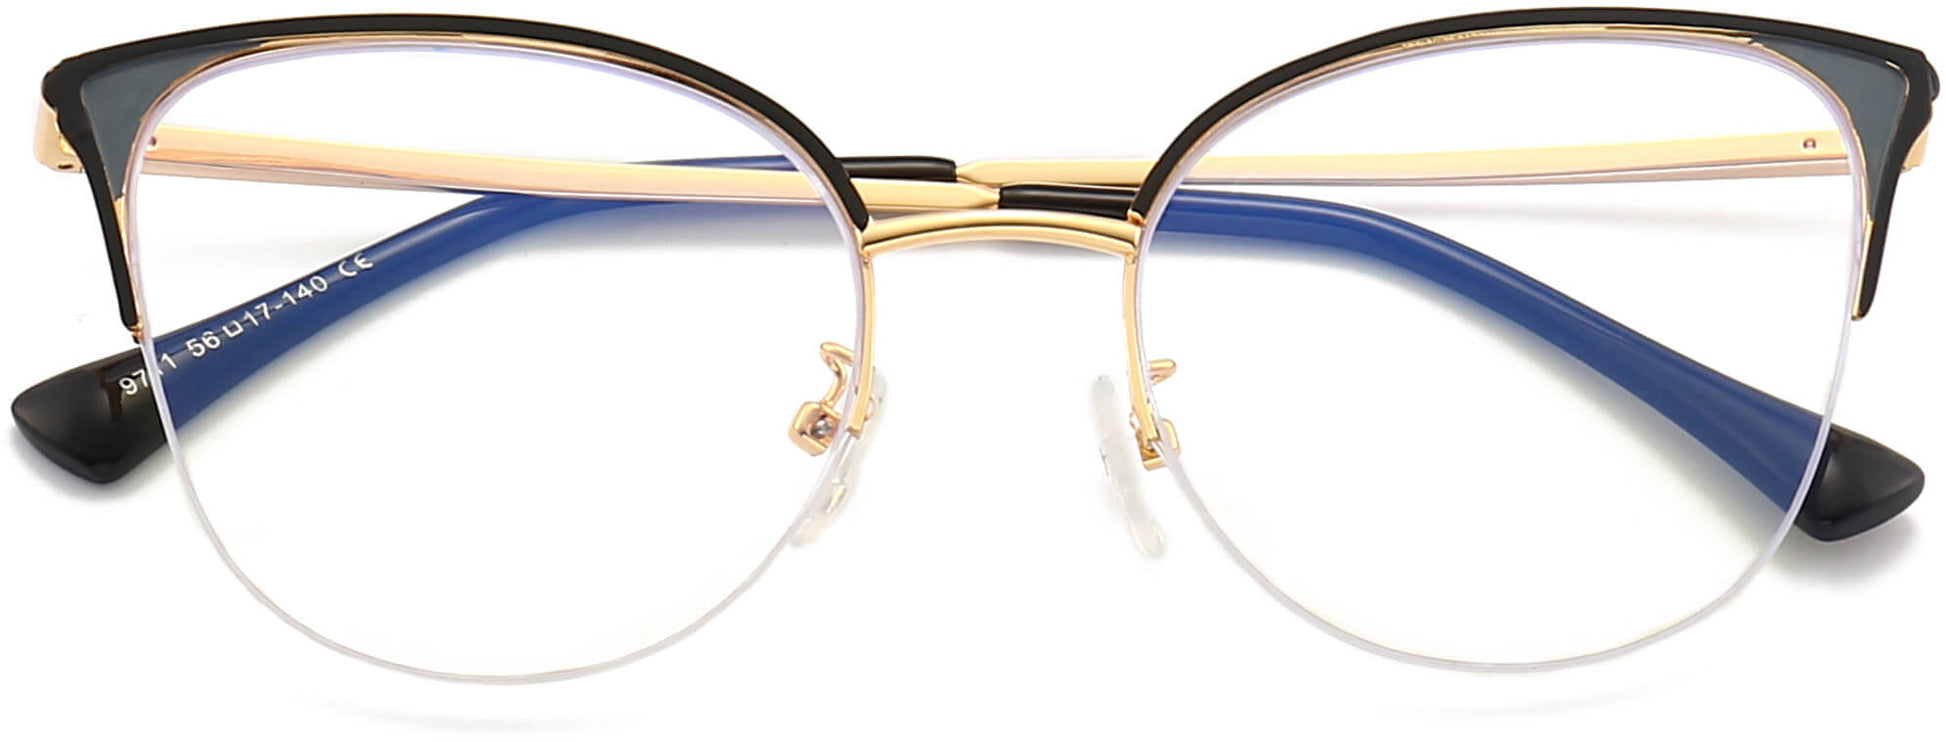 Nia Cateye Black Eyeglasses from ANRRI, closed view